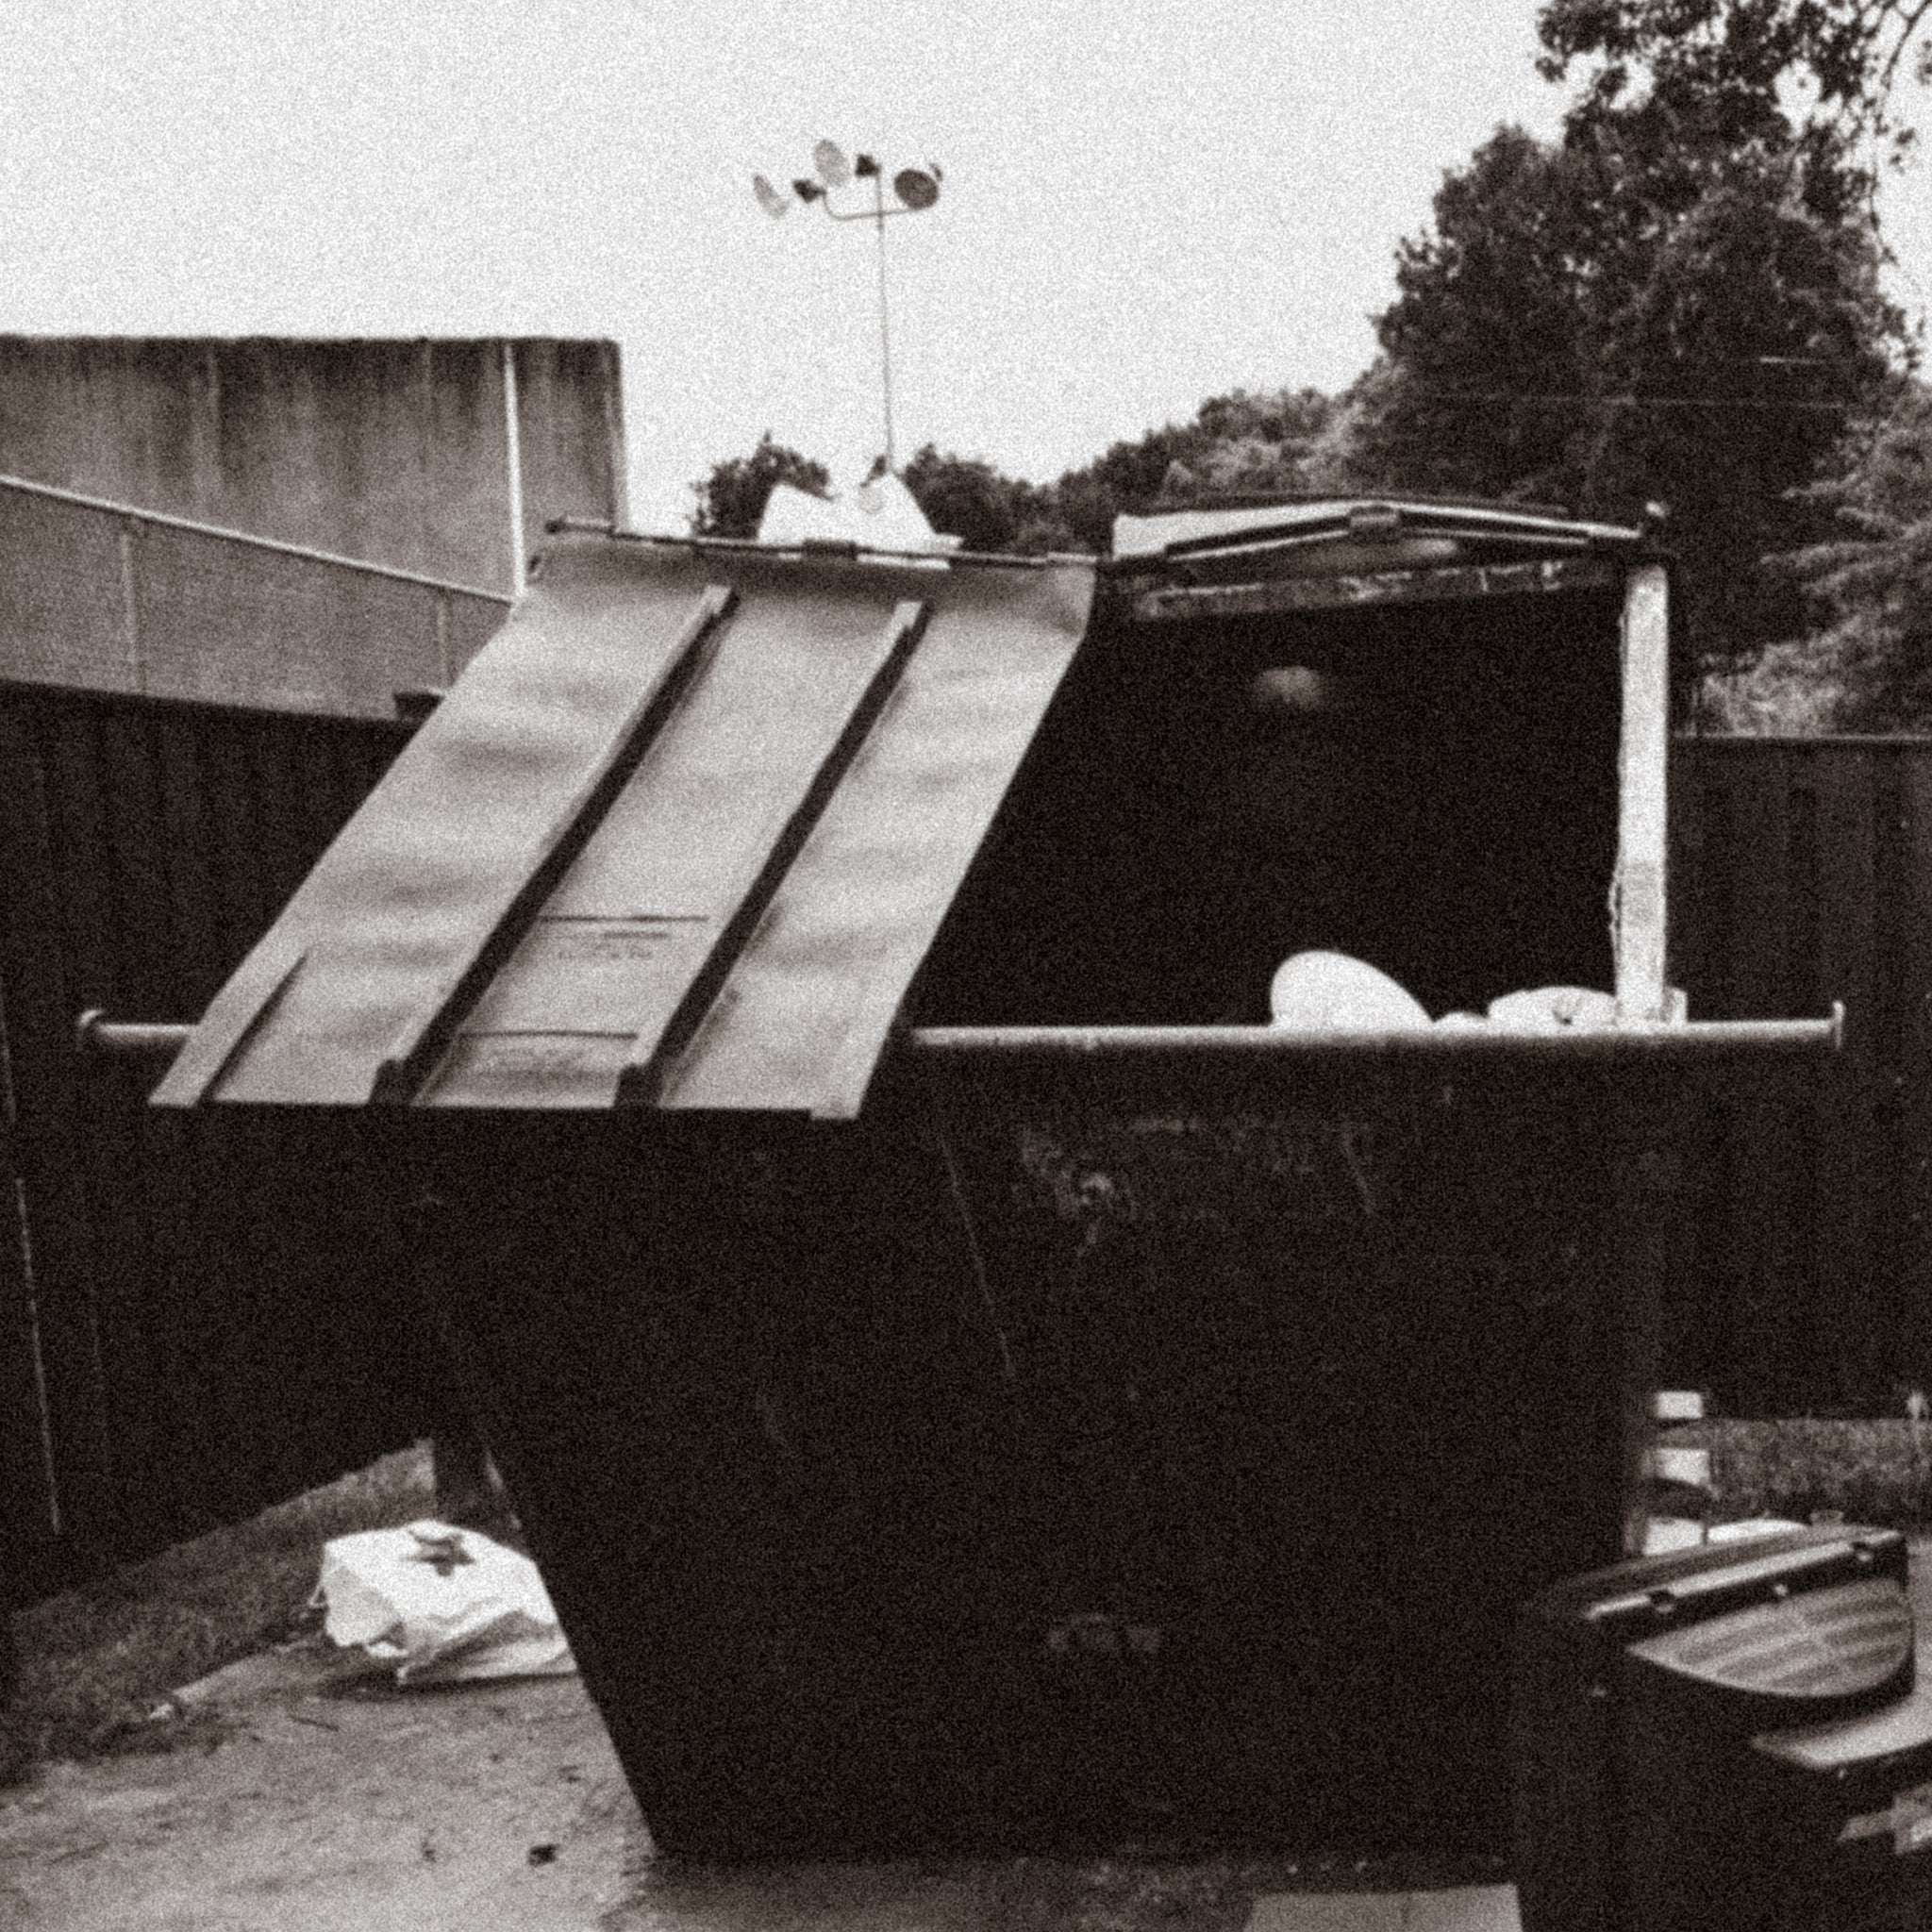 Dumpster Dive (Digital Album)